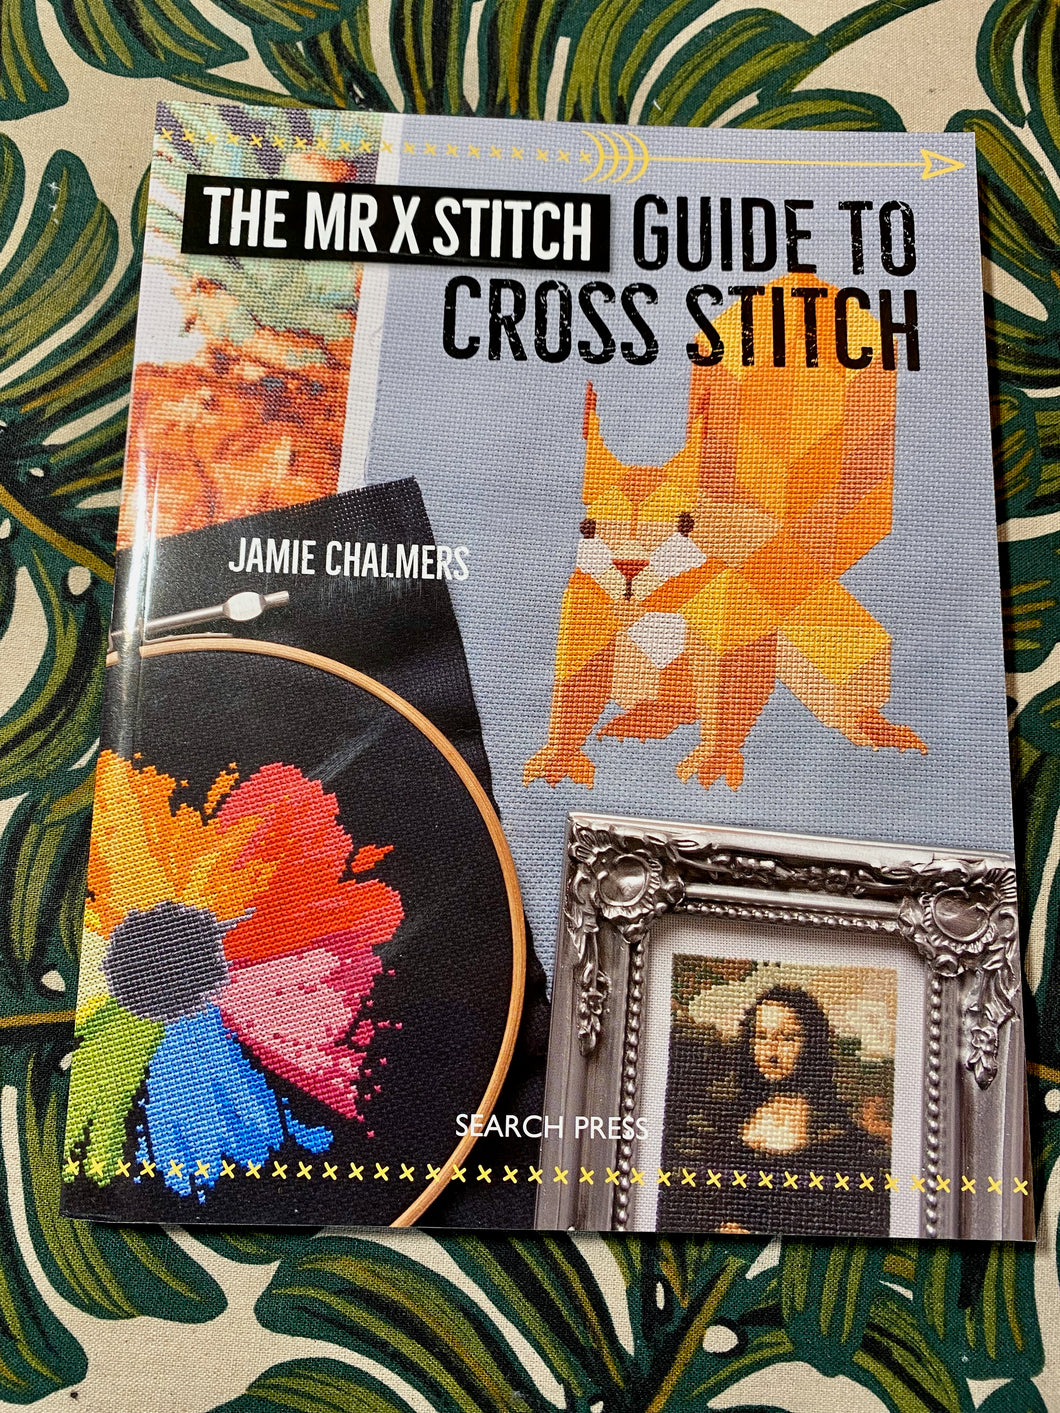 The Mr X Stitch Guide to Cross Stitch by Jamie Chalmers